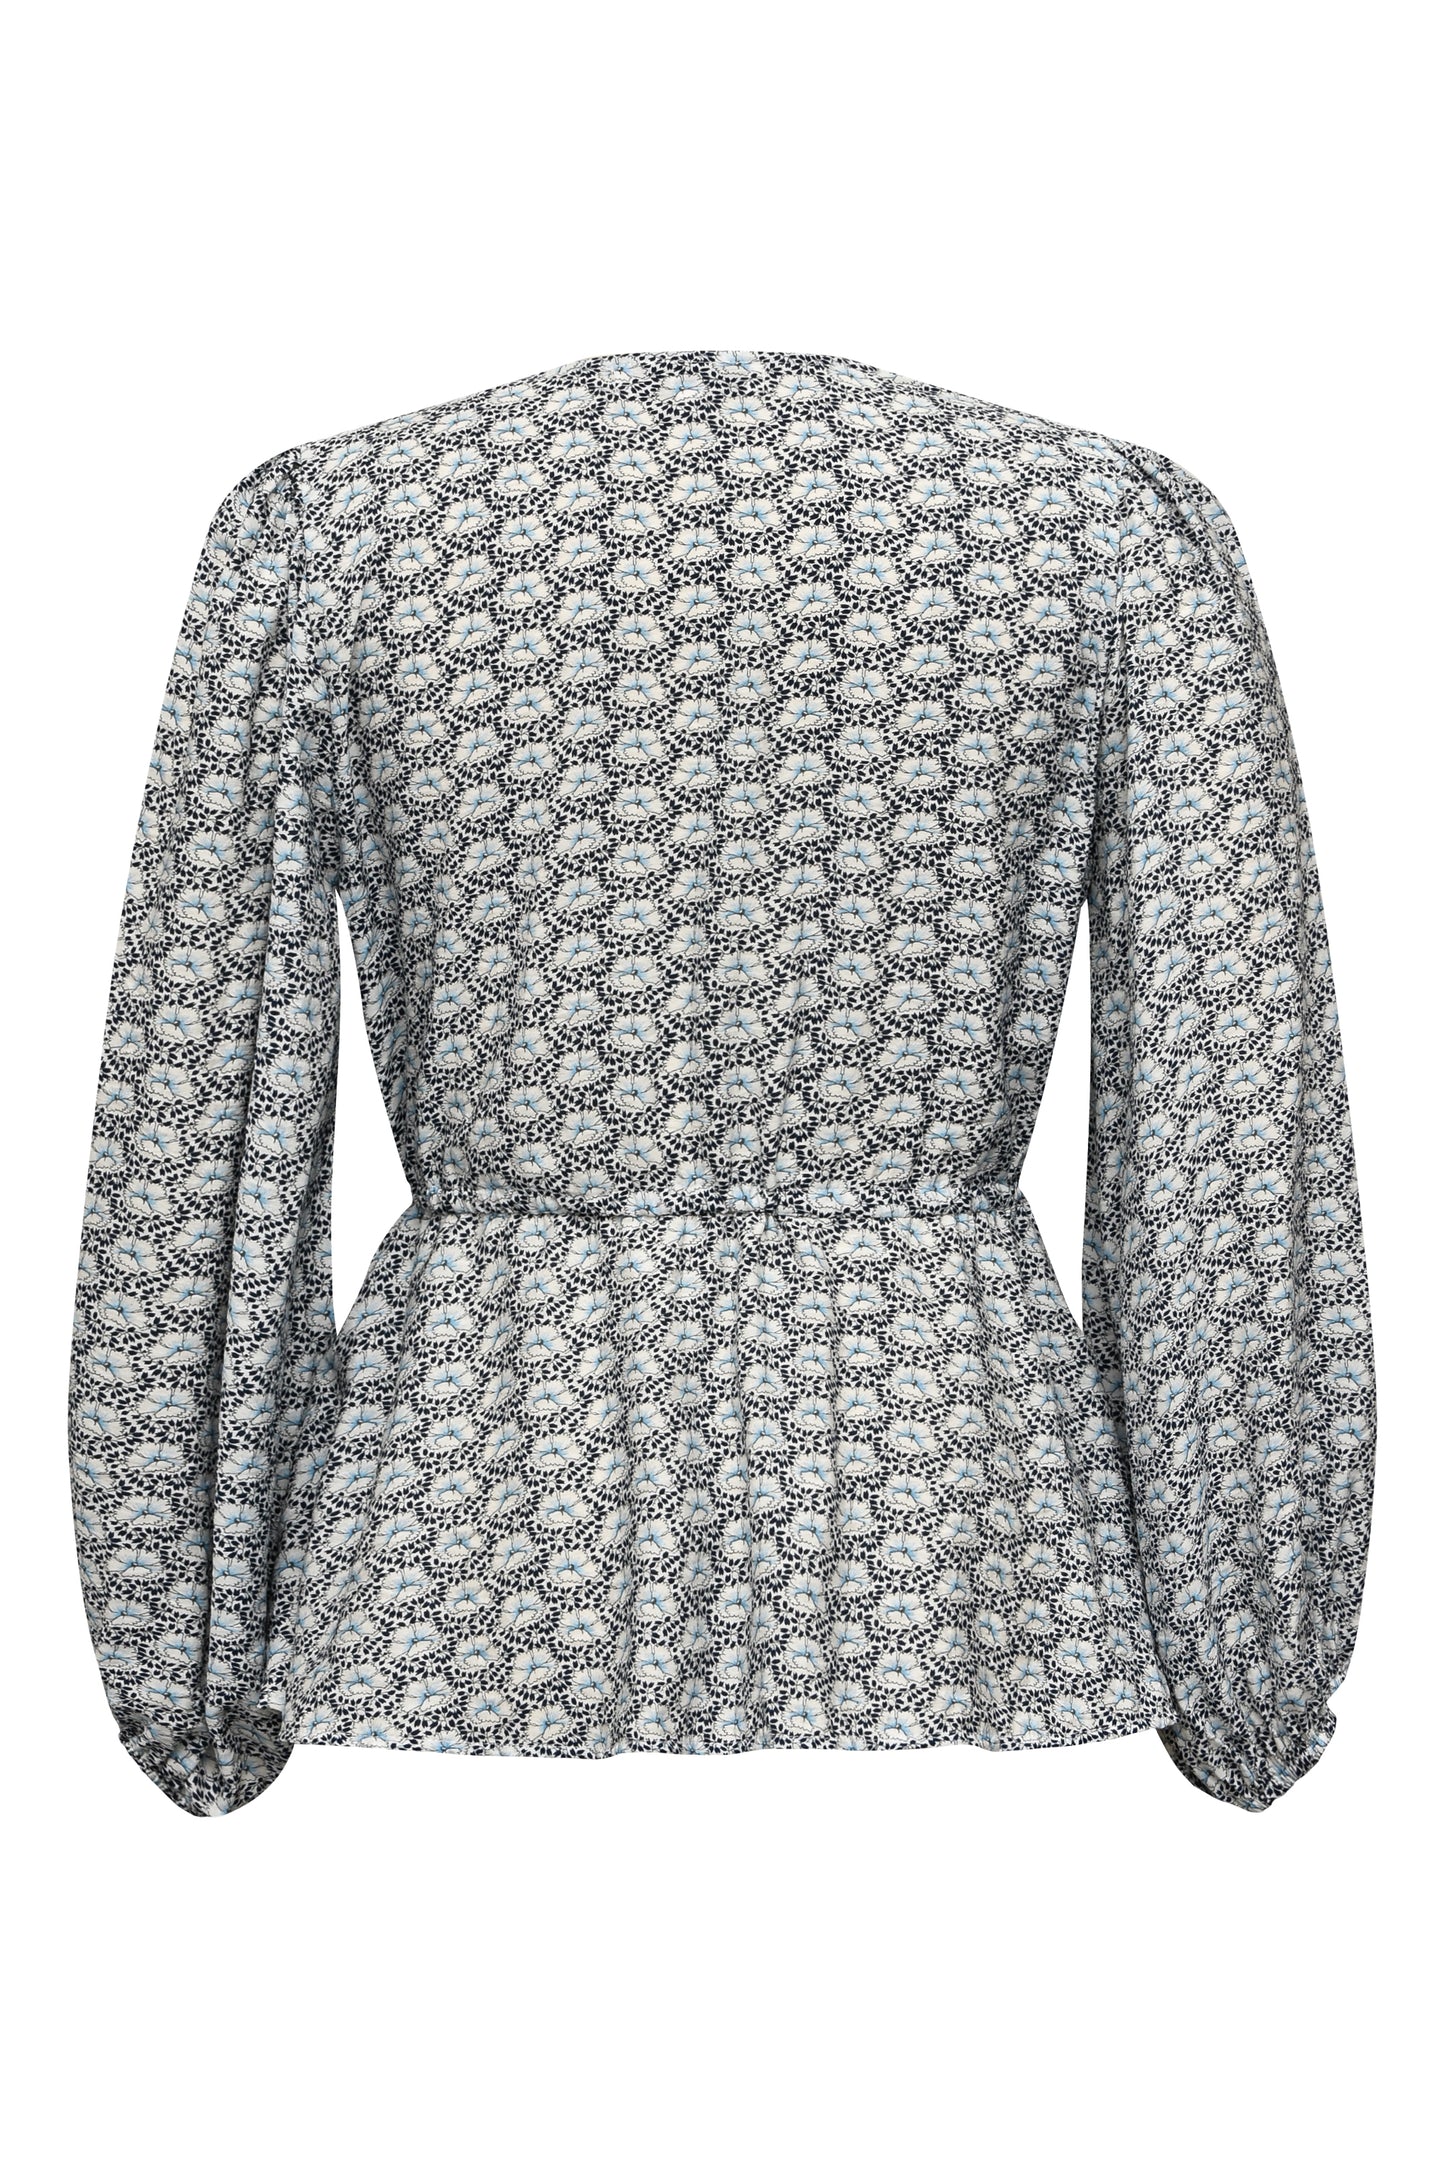 A-VIEW -  Luna blouse - Blåt blomsterprint